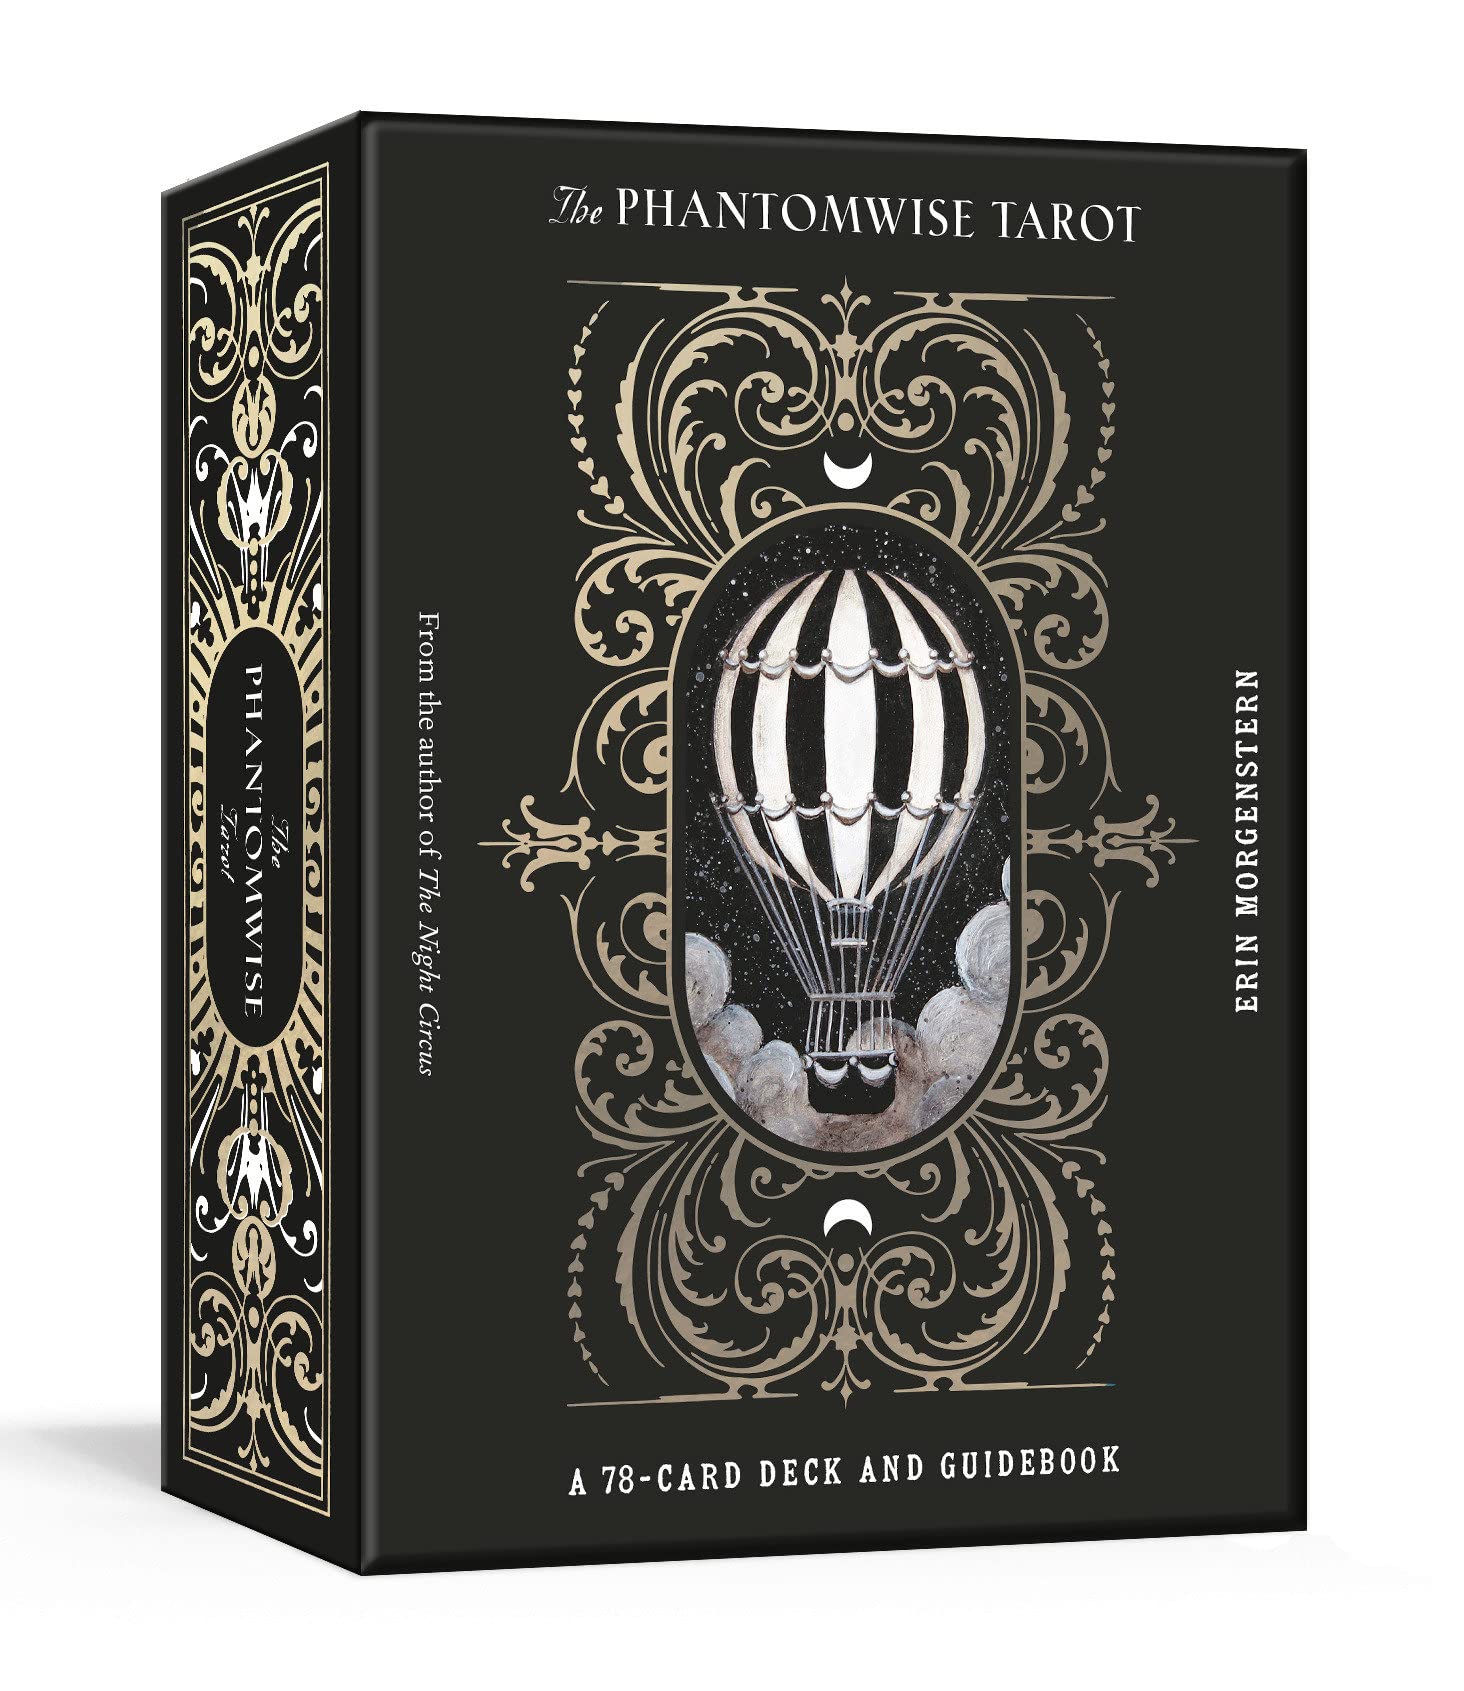 The Phantomwise Tarot: A 78-Card Deck and Guidebook